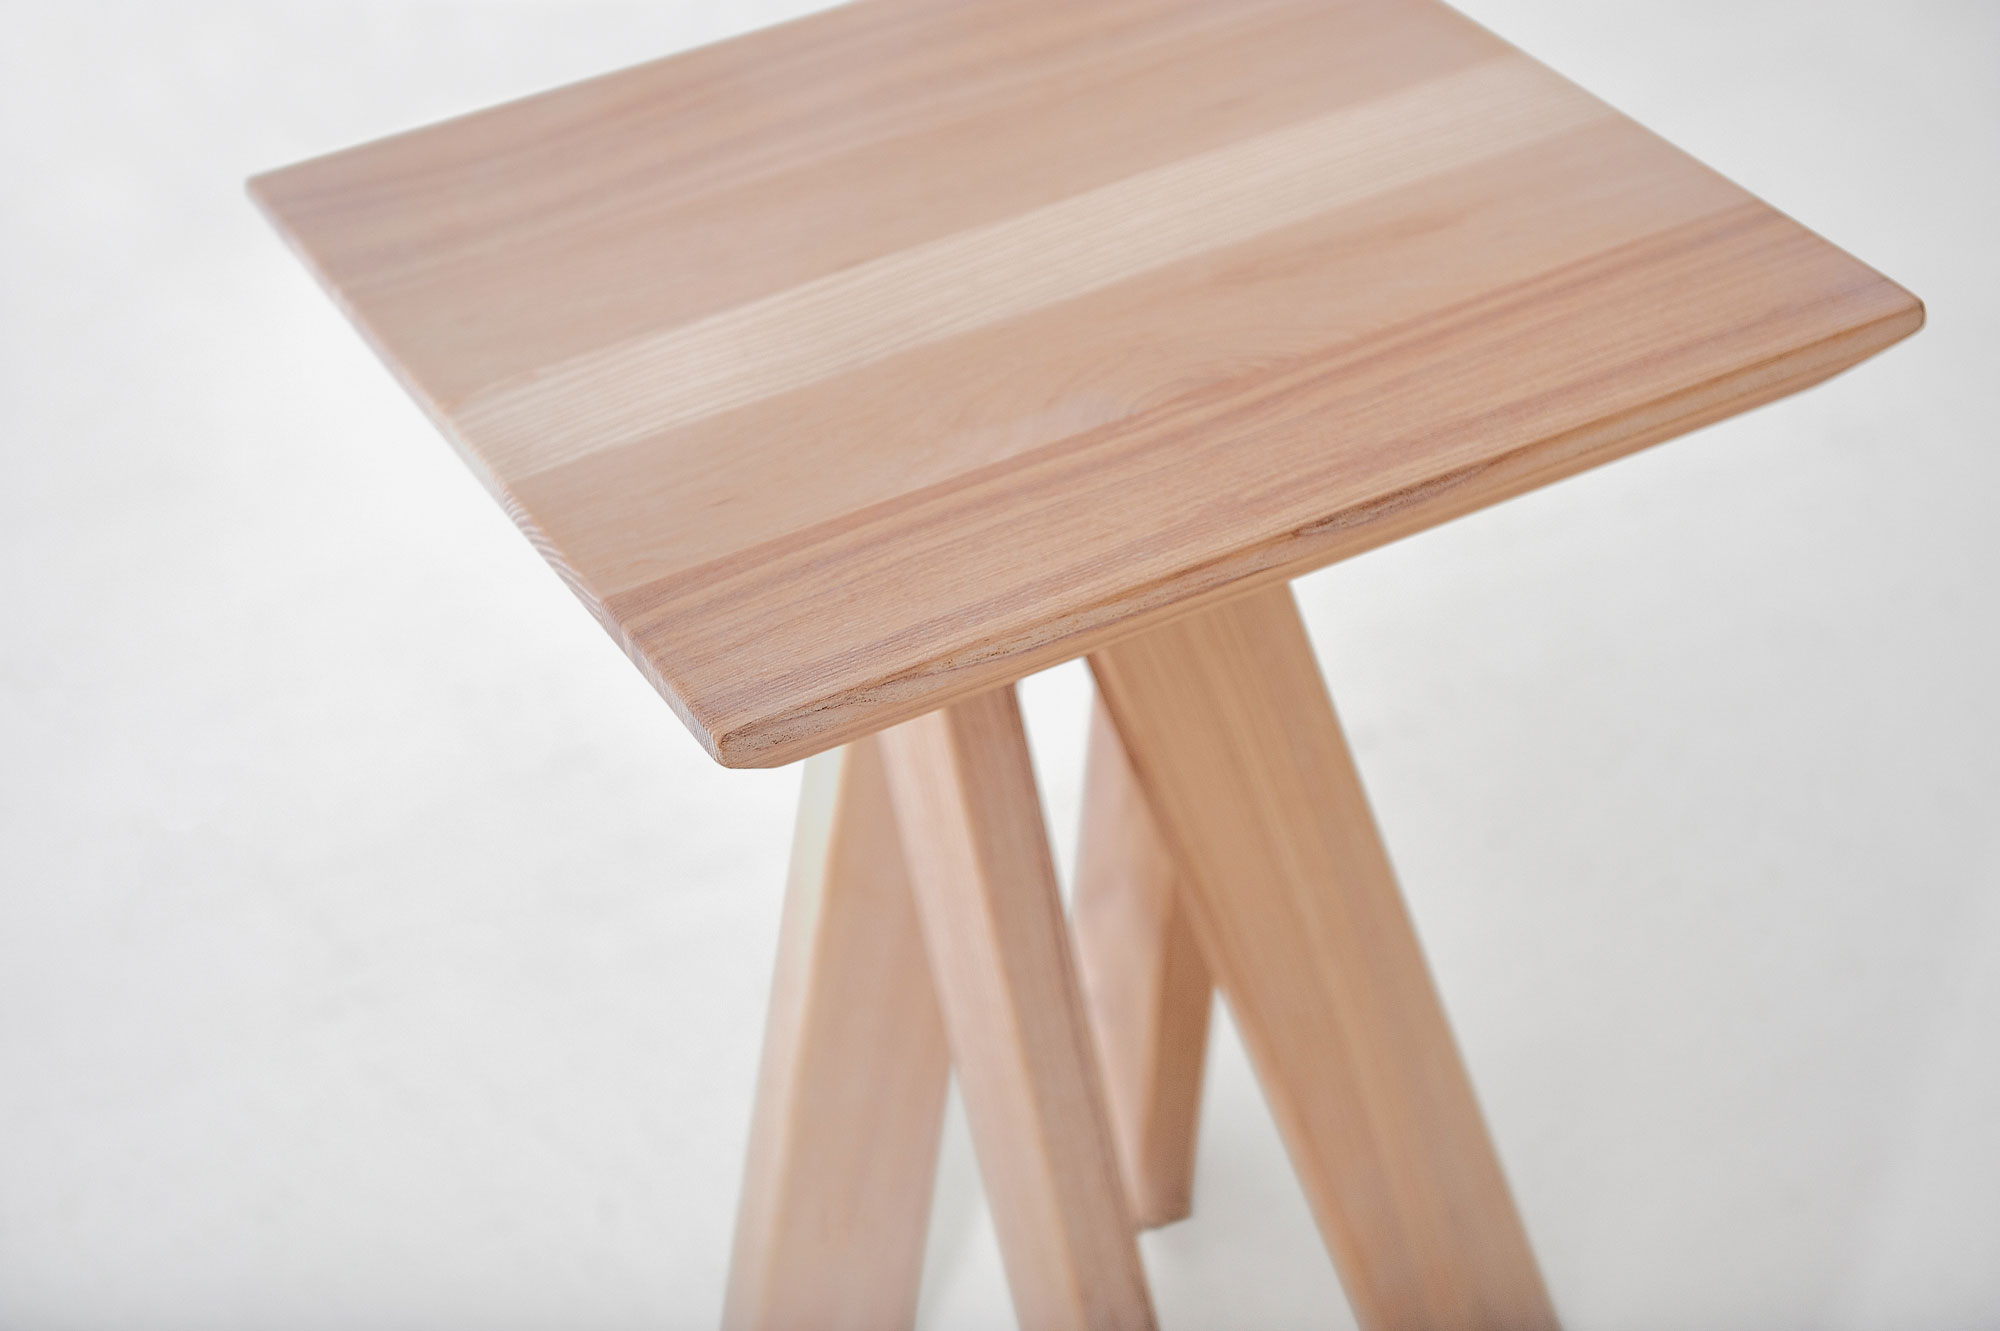 Designer Coffee Table ZIRKEL QG Edited custom made in solid wood by vitamin design